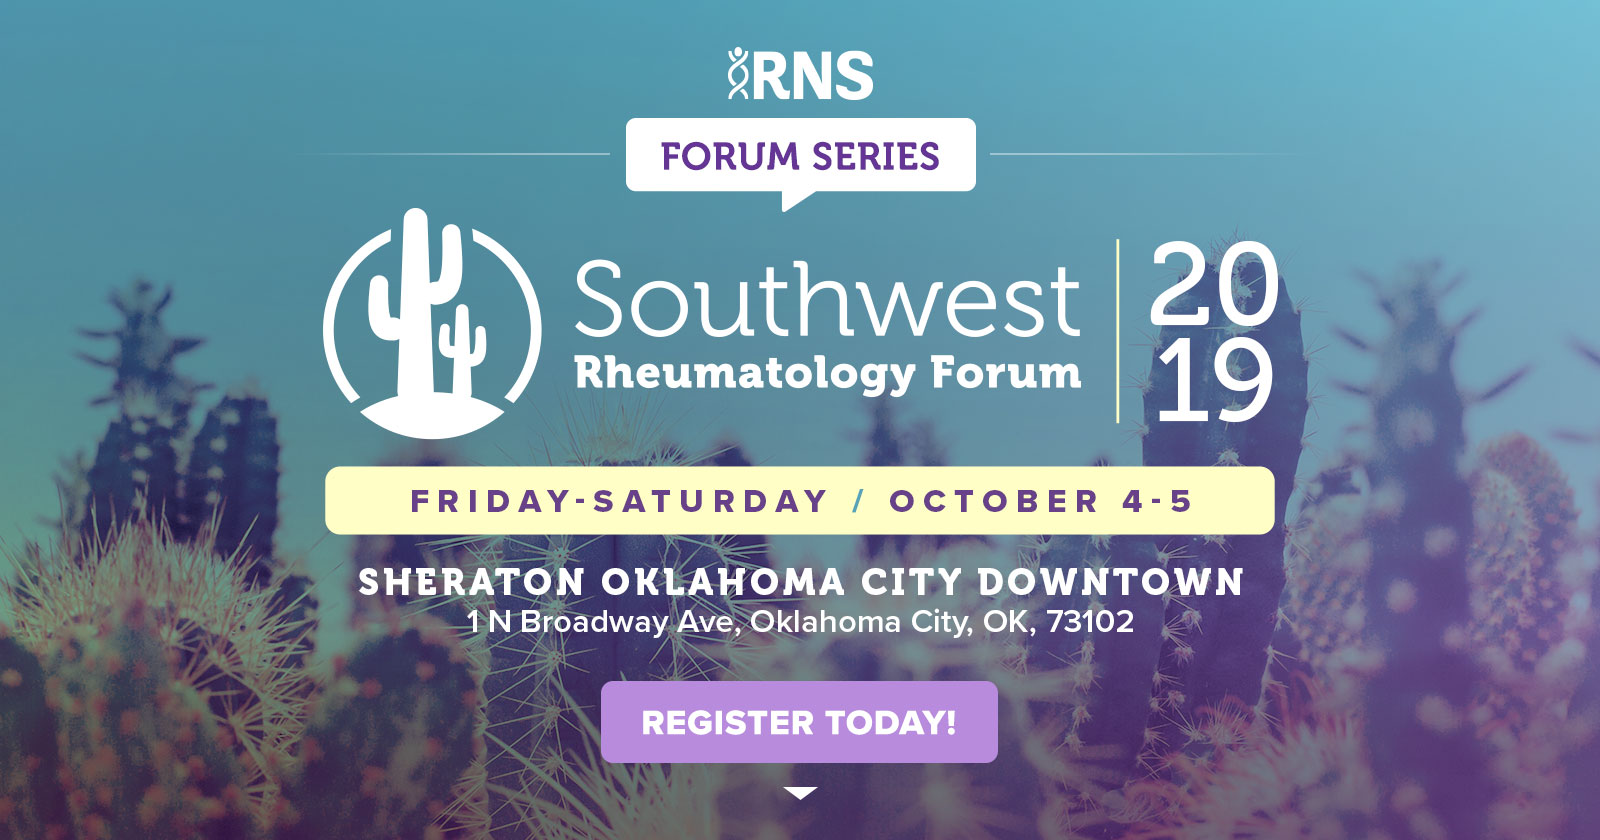 RNS Forum Series / SWRF 2019 / October 4-5